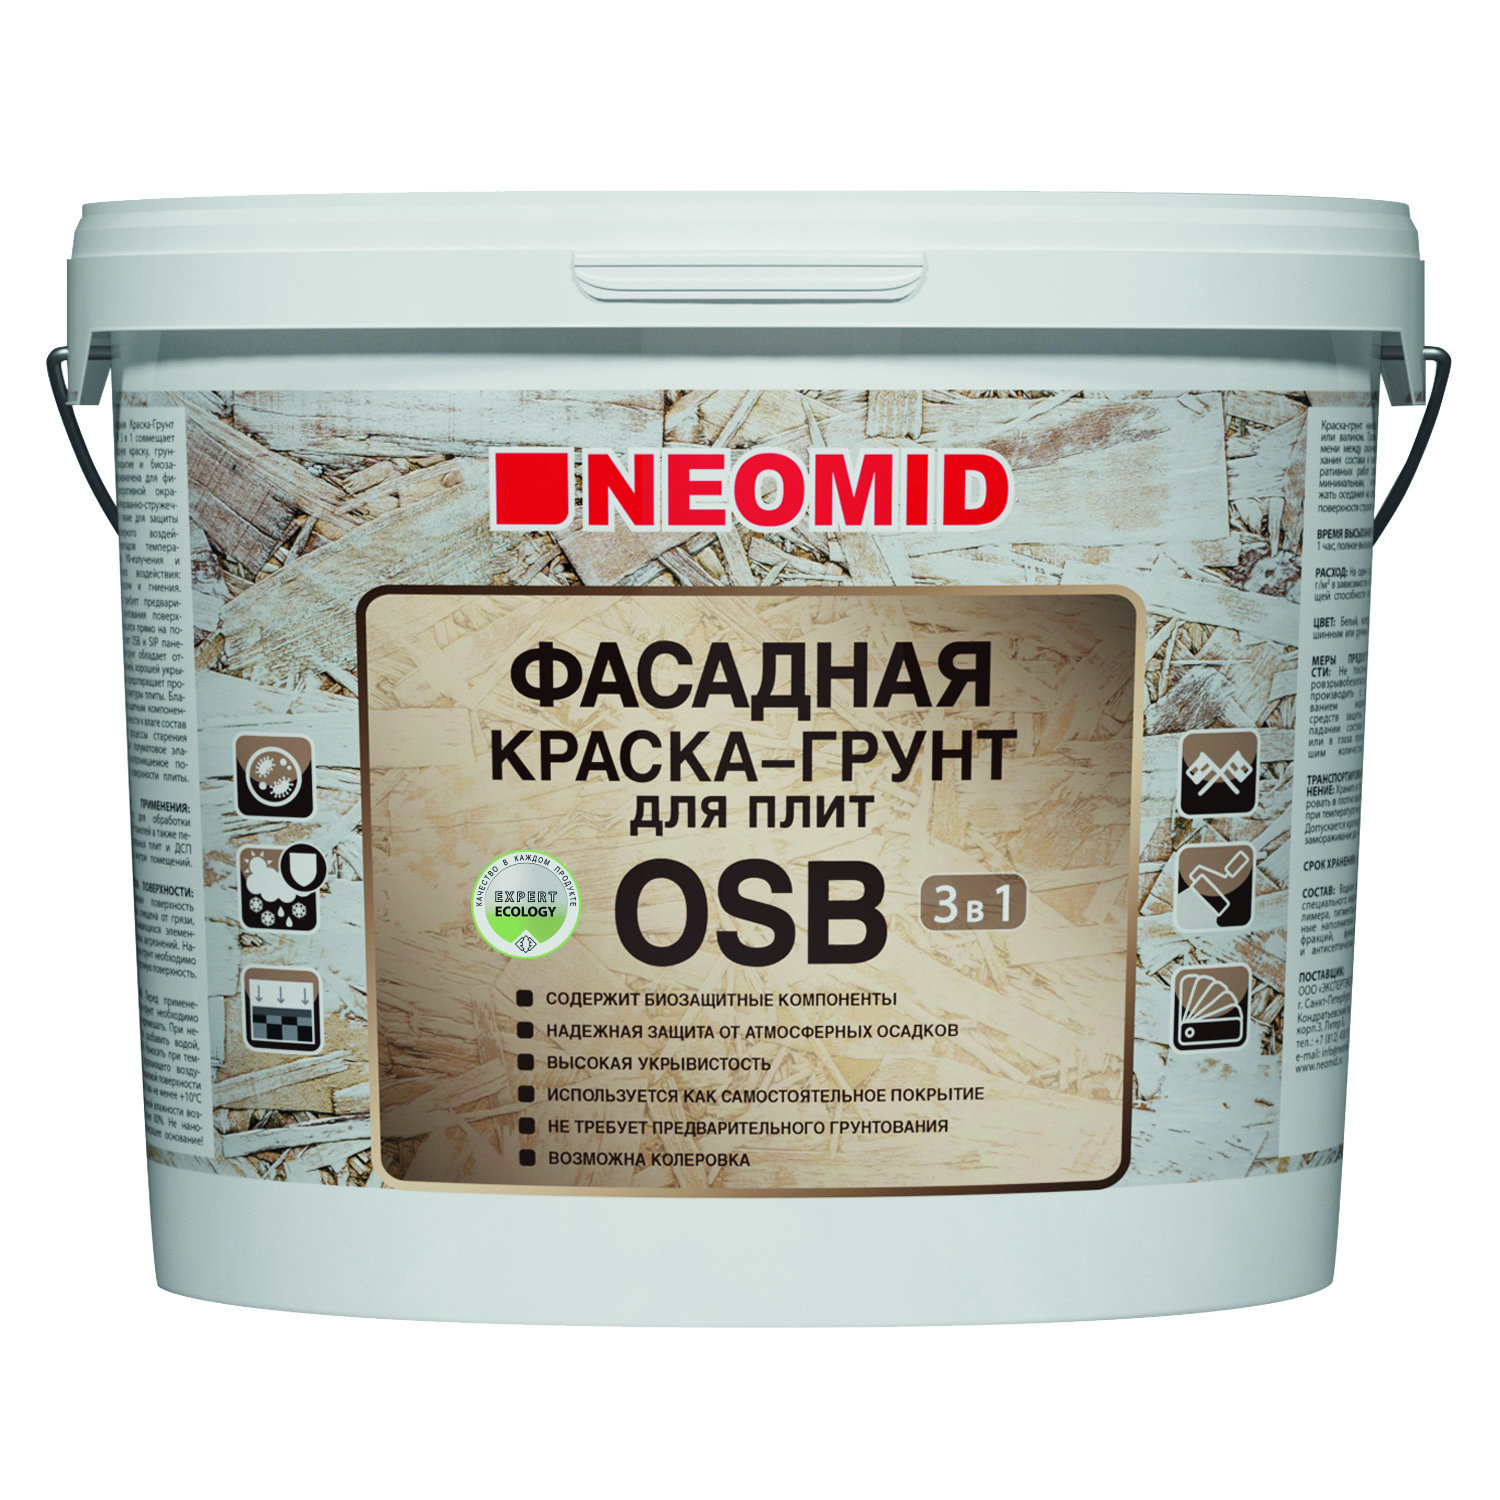 Neomid для плит osb. Неомид фасадная краска-грунт для плит OSB 3 В 1. Грунт NEOMID для плит OSB 7кг. Фасадная краска-грунт для плит OSB NEOMID Proff 3в1. Неомид краска грунт для ОСБ.